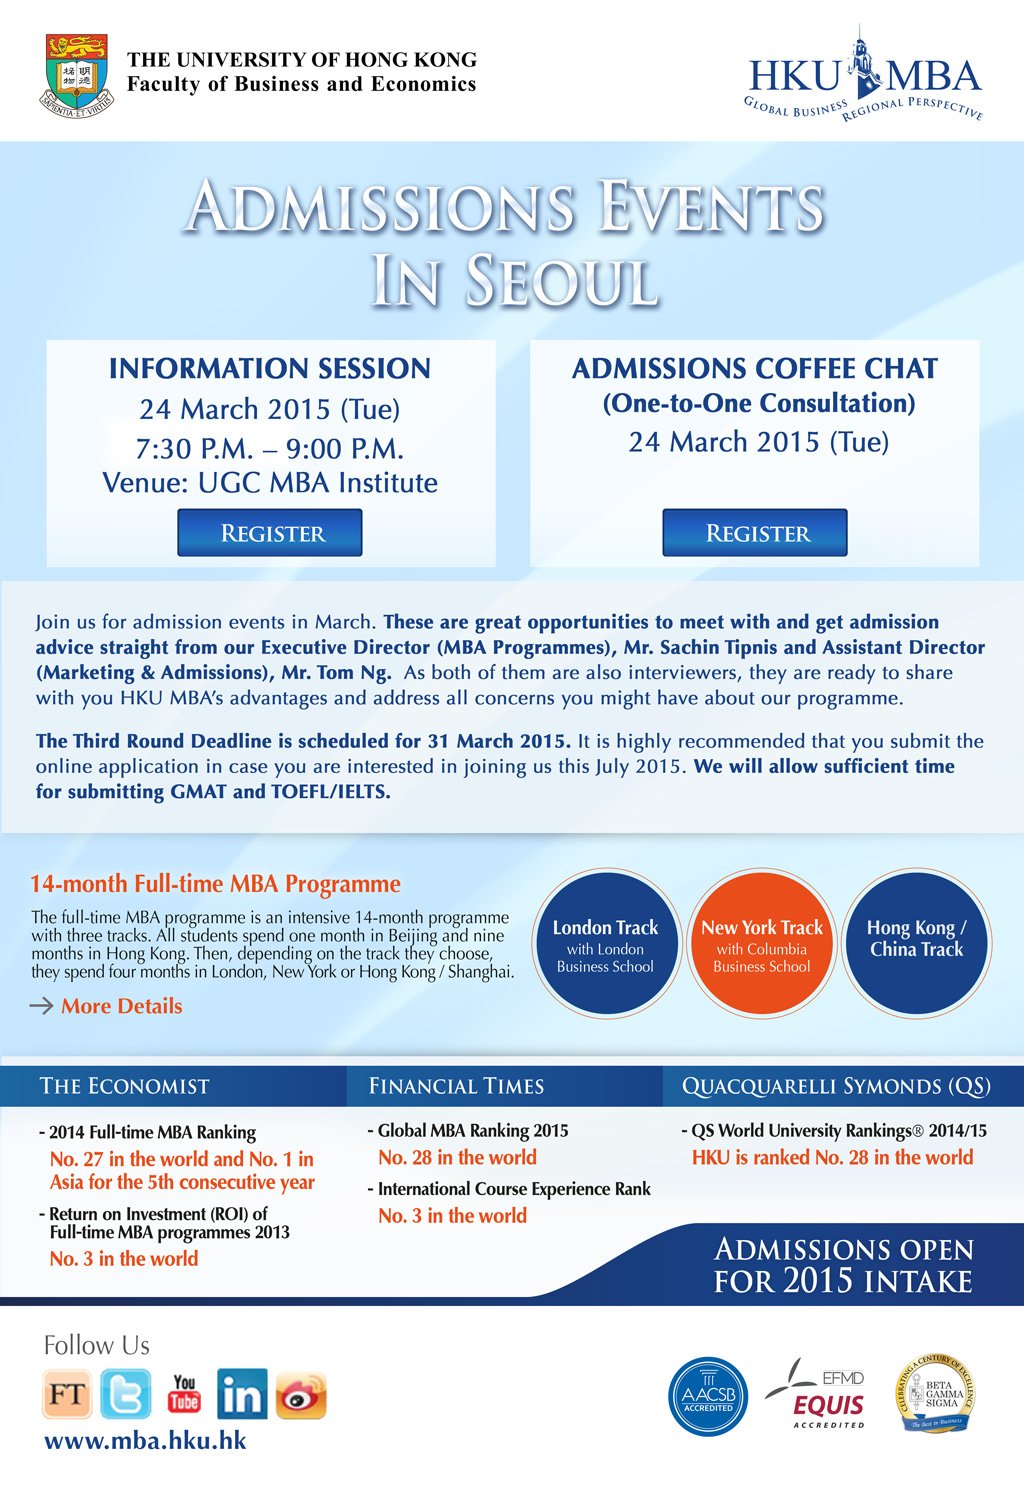 HKU15_004_admission_korea_March2015_eDM_aw01.jpg